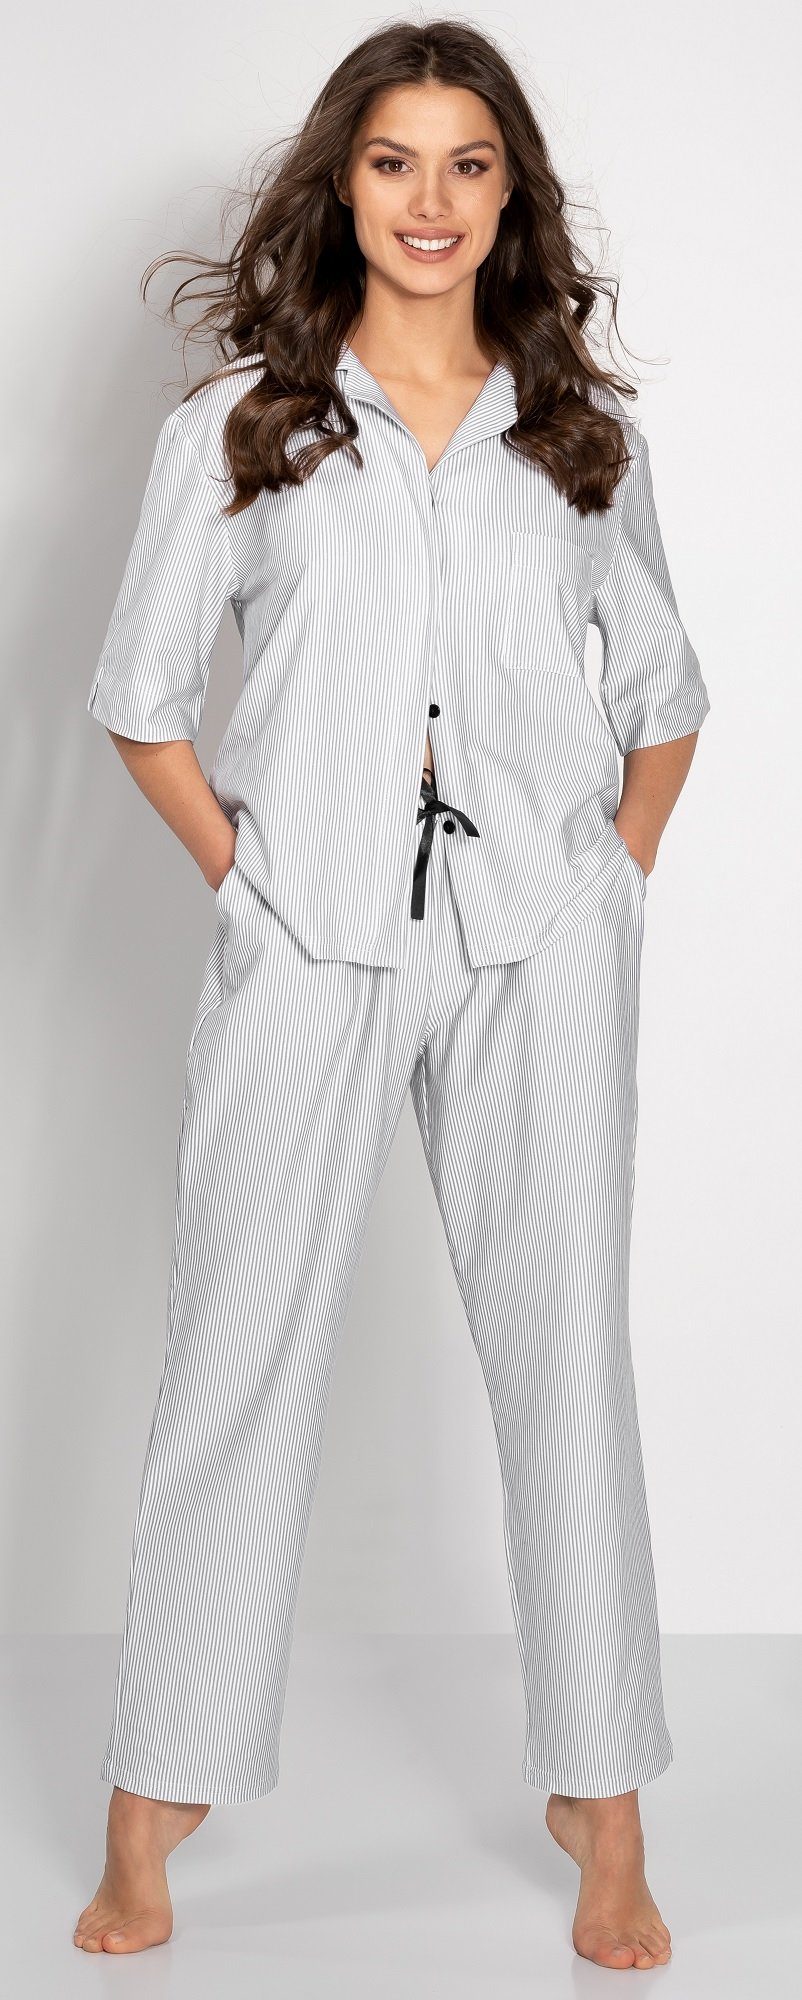 Momenti per me Schlafanzug elegant, 2teiliger Pyjama Oversize-Style